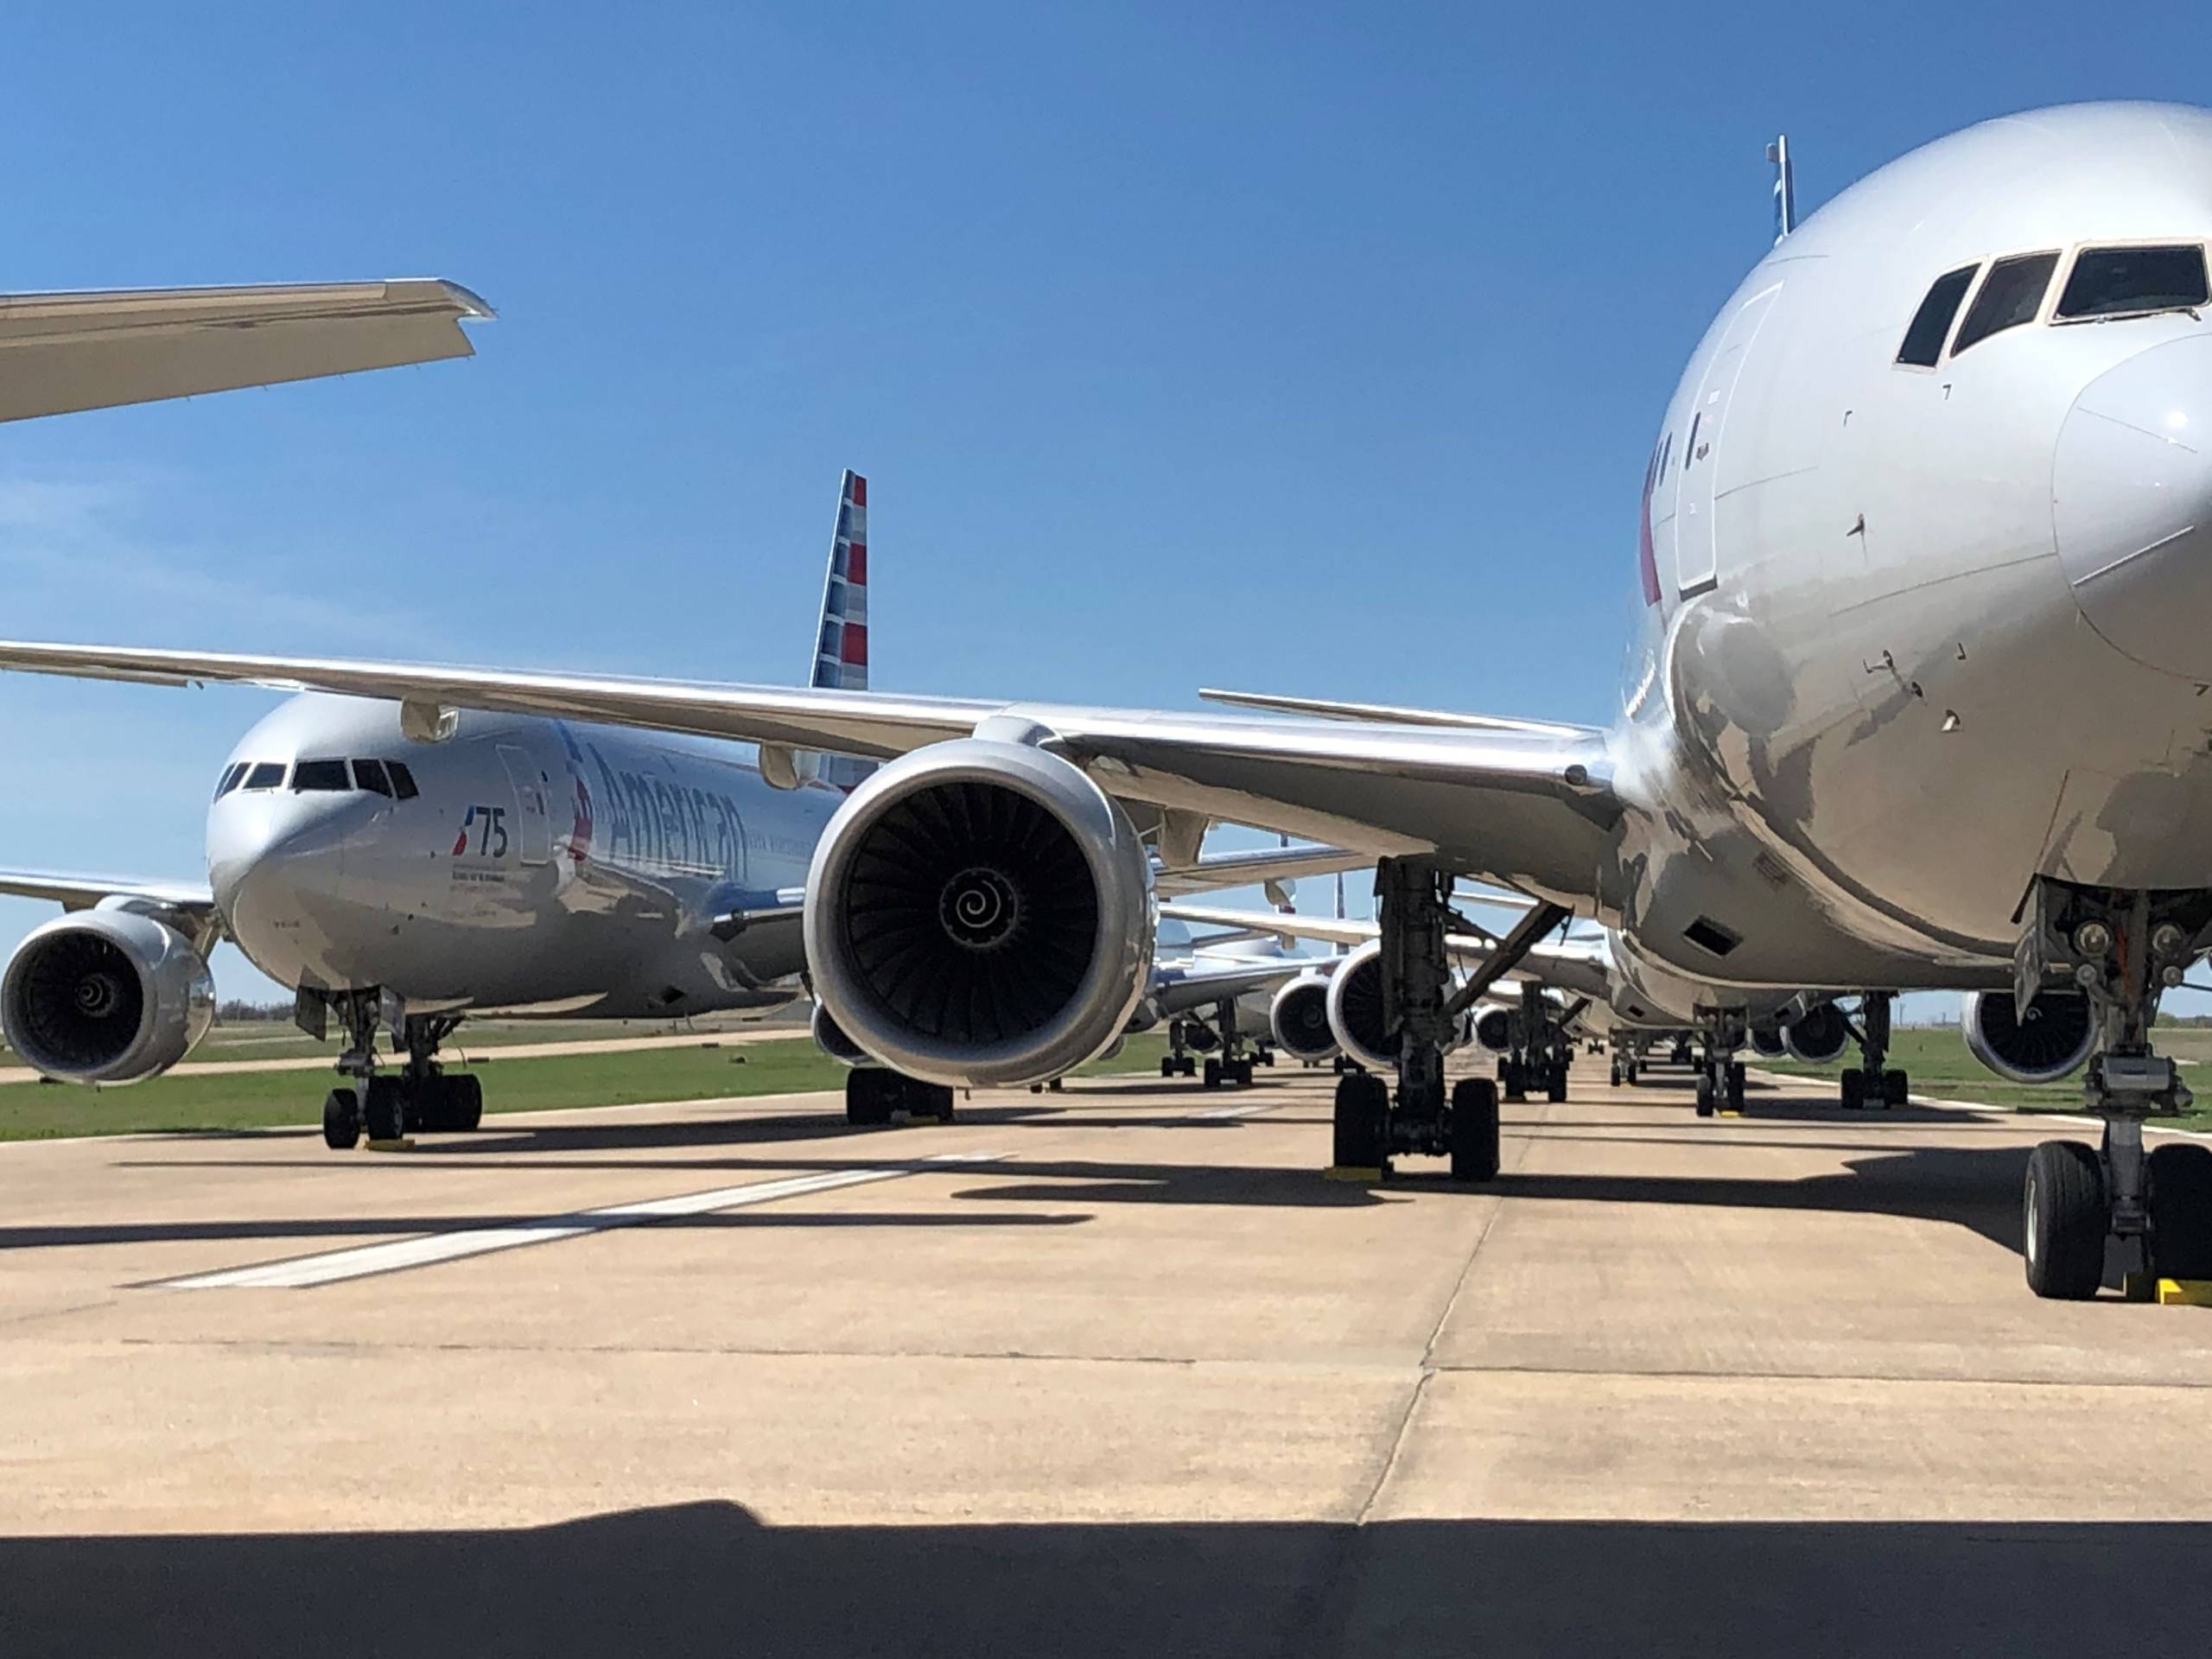 Tulsa parked planes